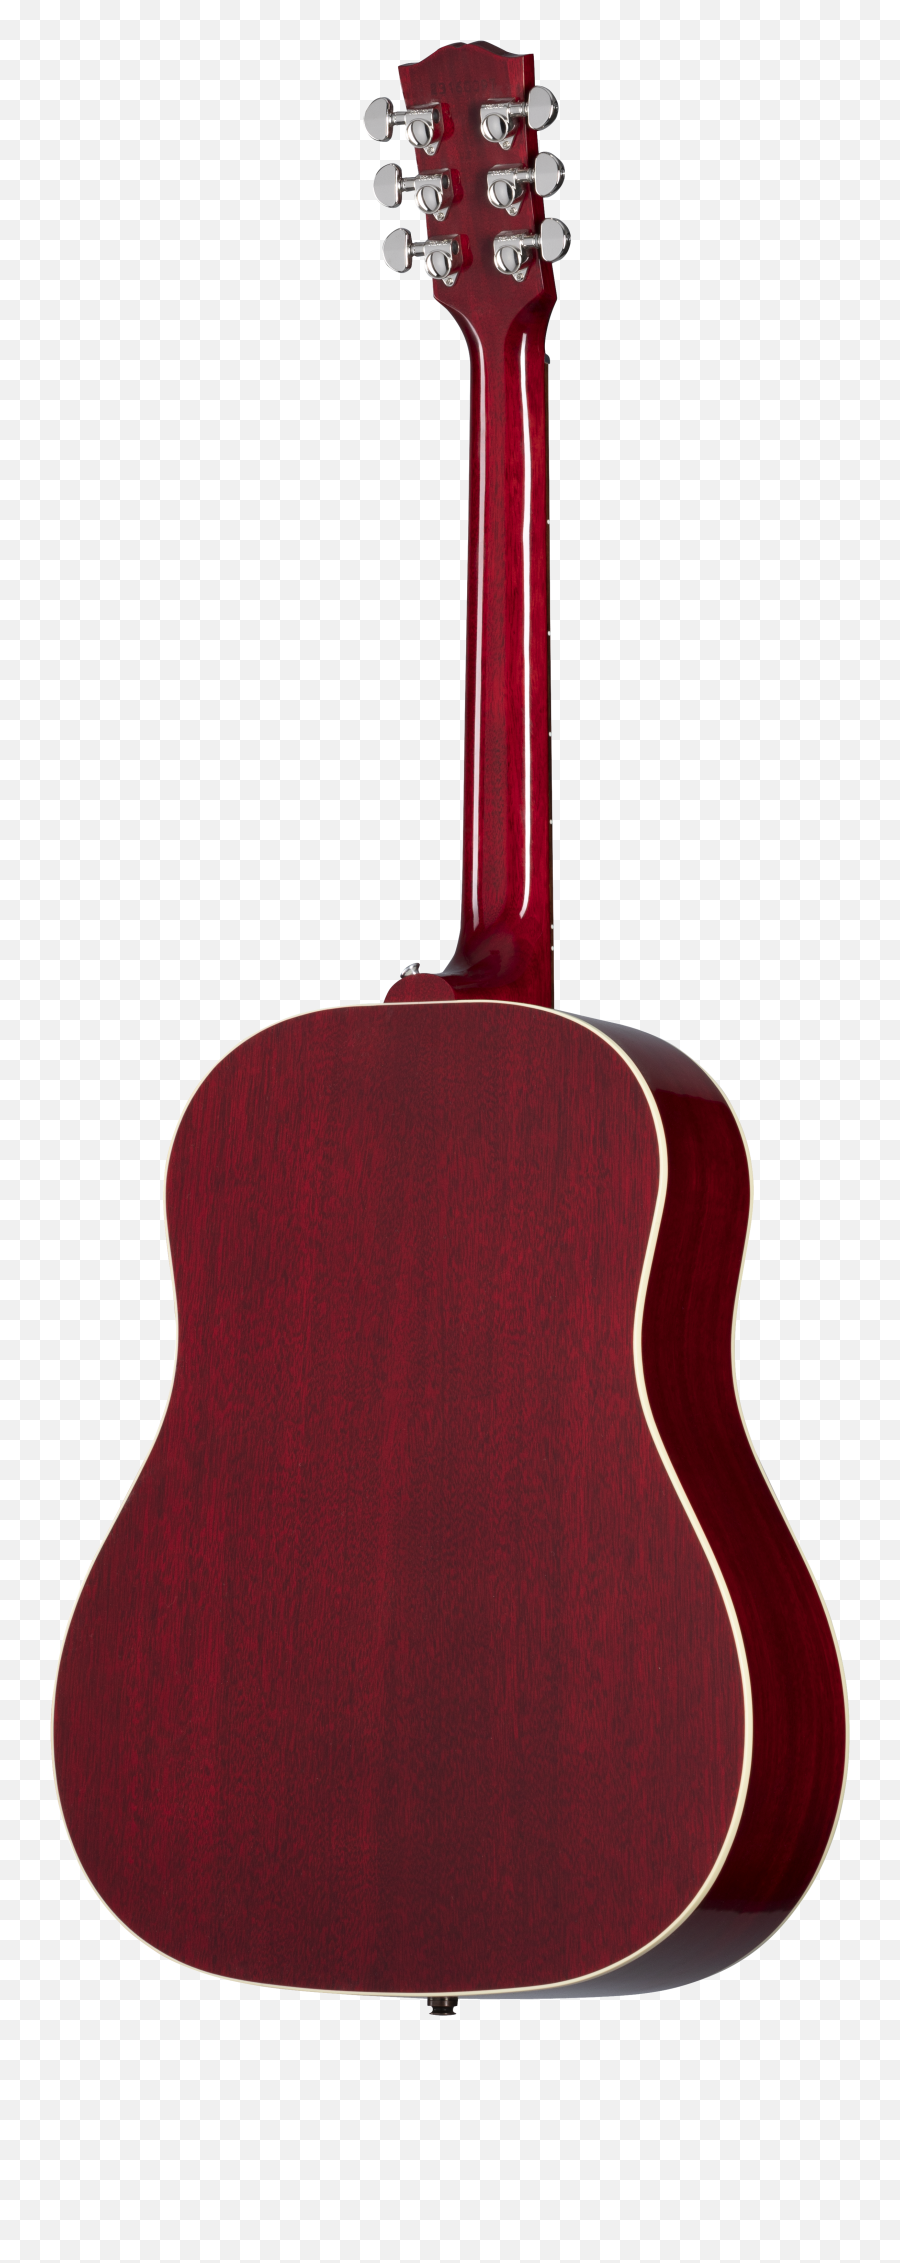 Gibson Acoustic Guitars Emoji,Acoustic Guitar Transparent